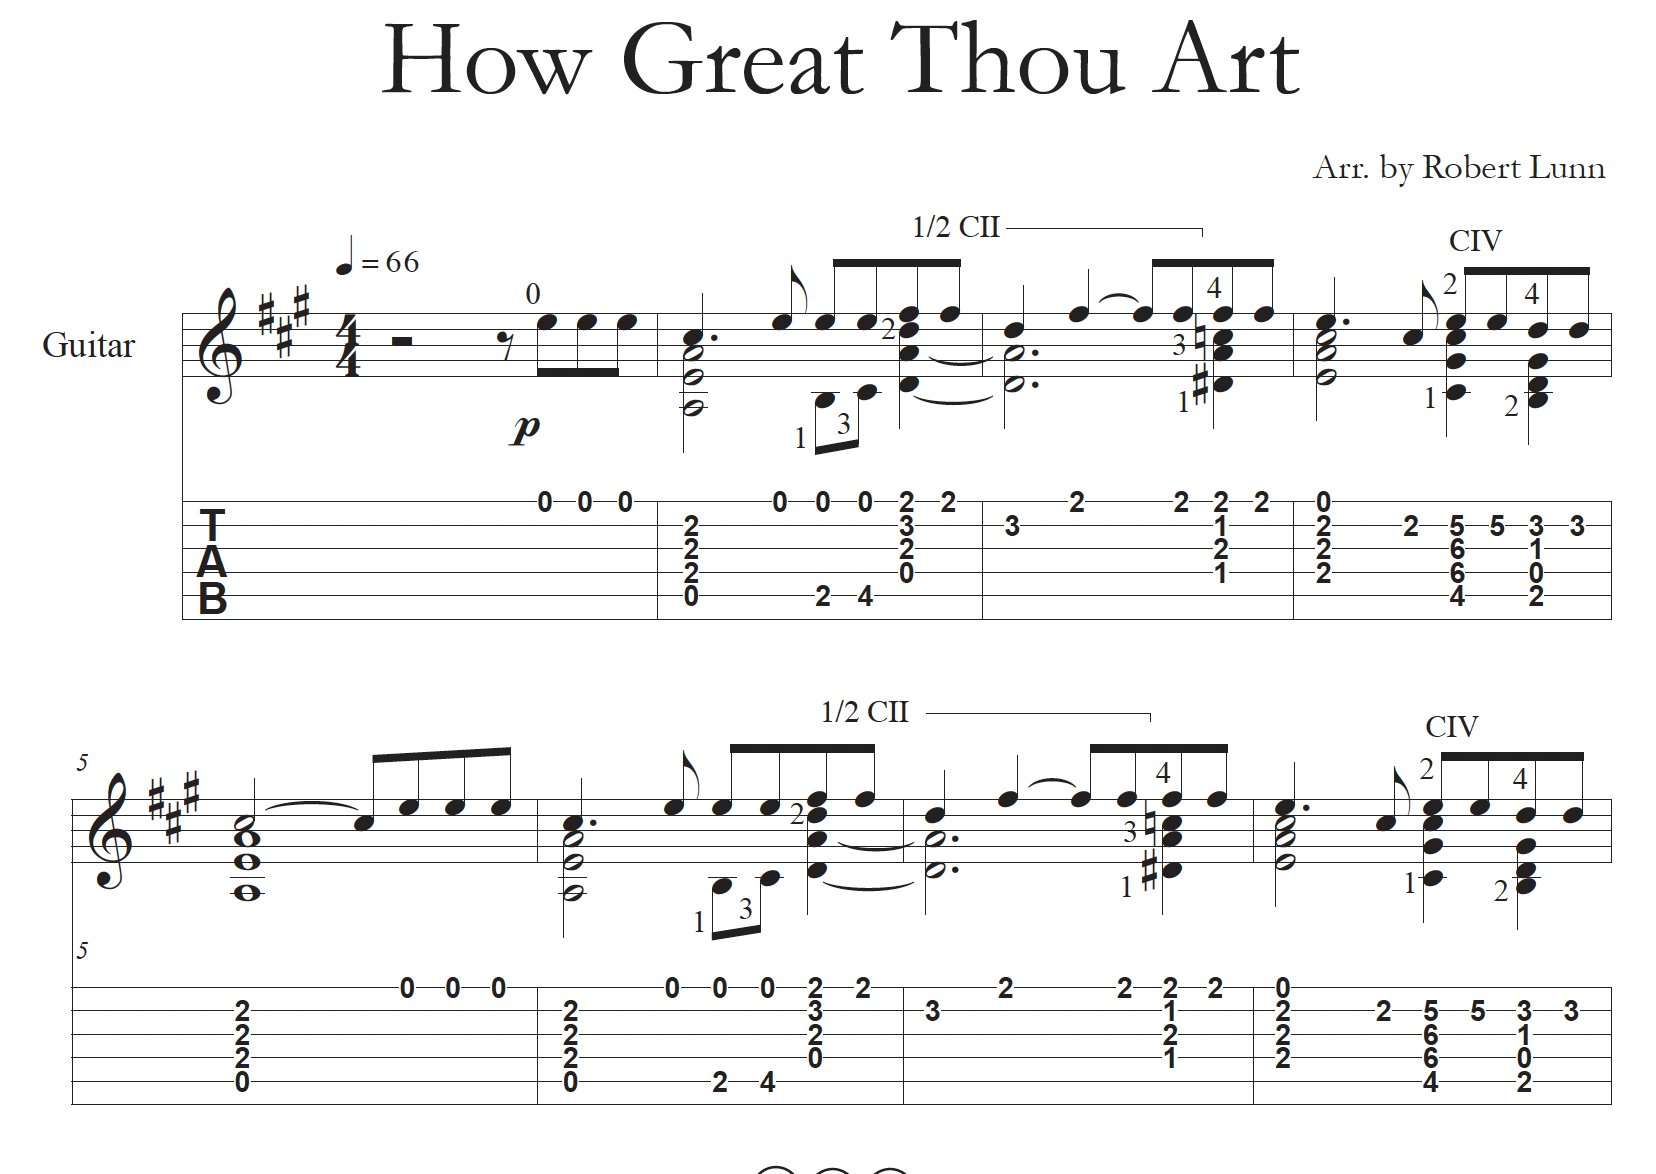 How Great Thou Art – Full Sheet Music/TAB – Classical Guitar